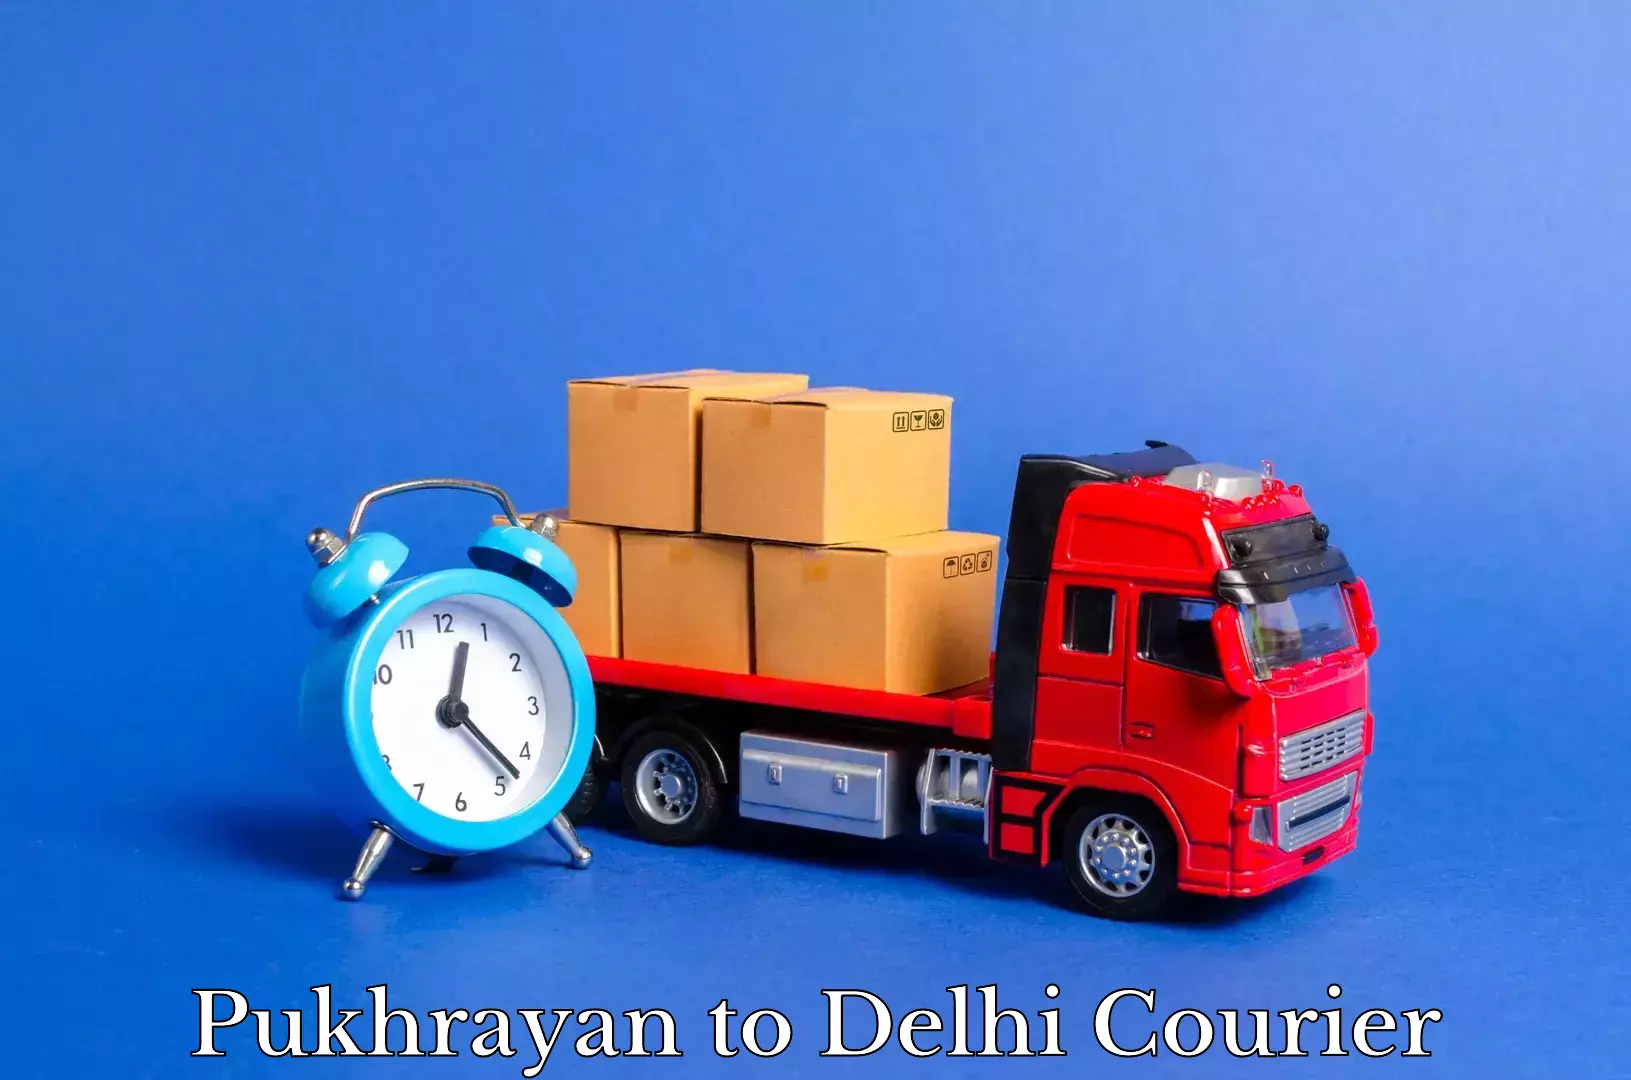 Professional moving company Pukhrayan to East Delhi